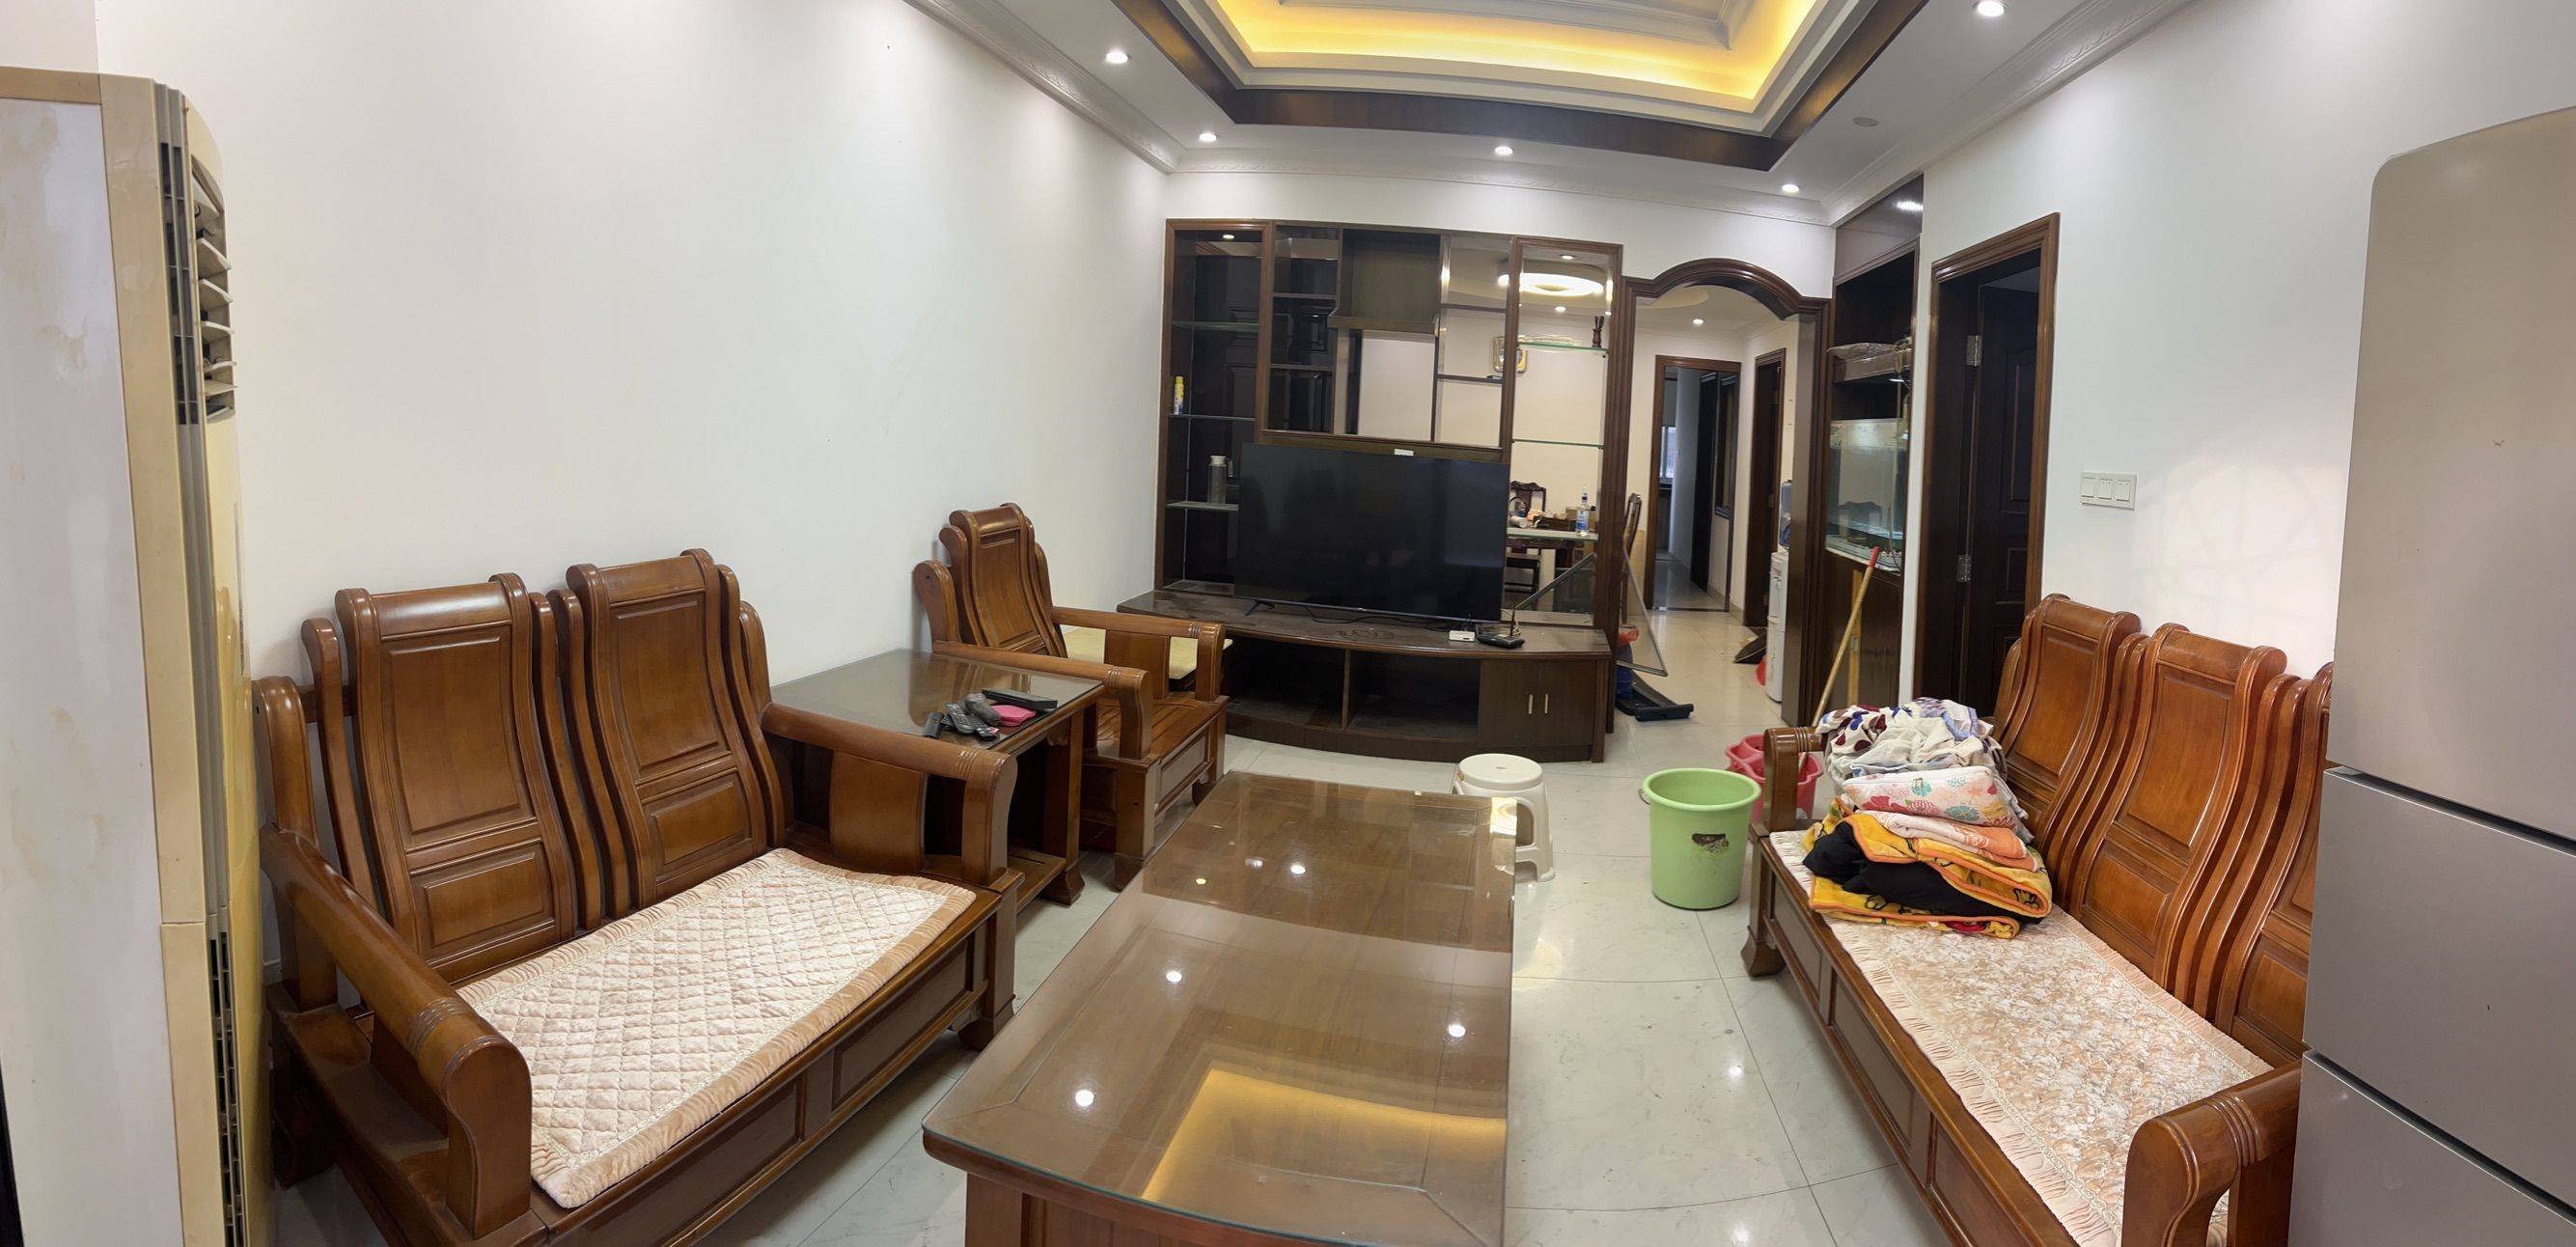 Guangzhou-Tianhe-Cozy Home,Clean&Comfy,No Gender Limit,Hustle & Bustle